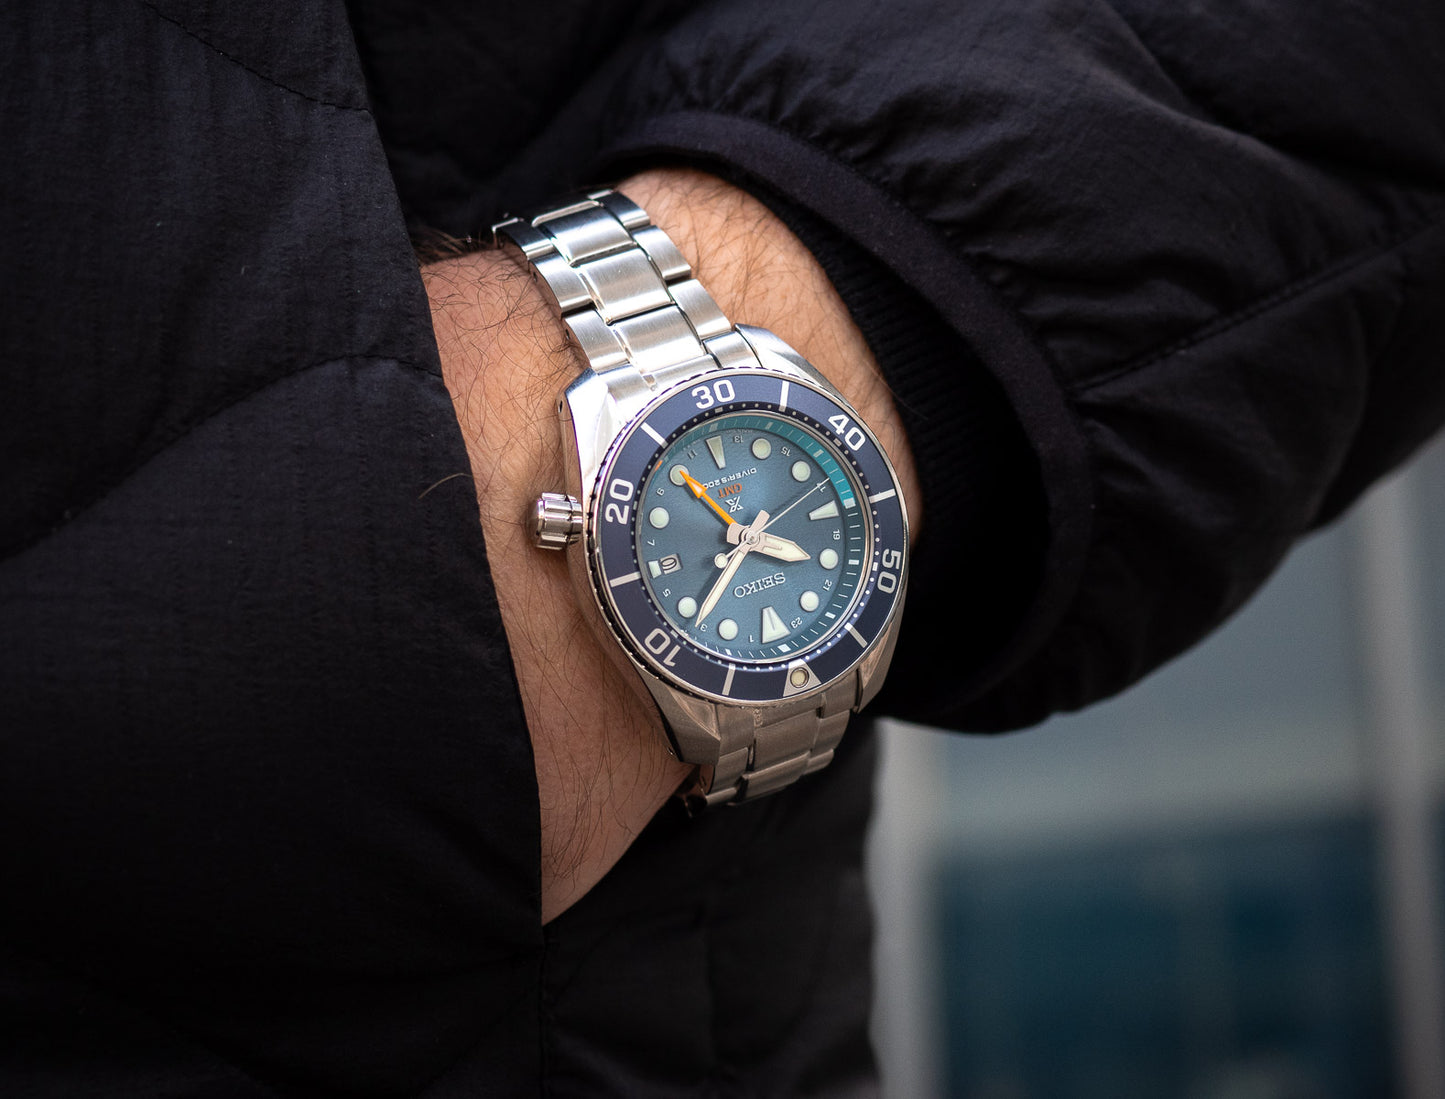 Seiko Prospex King Sumo GMT Solar Aqua Blue Men's Stainless Steel Watch SFK001J1